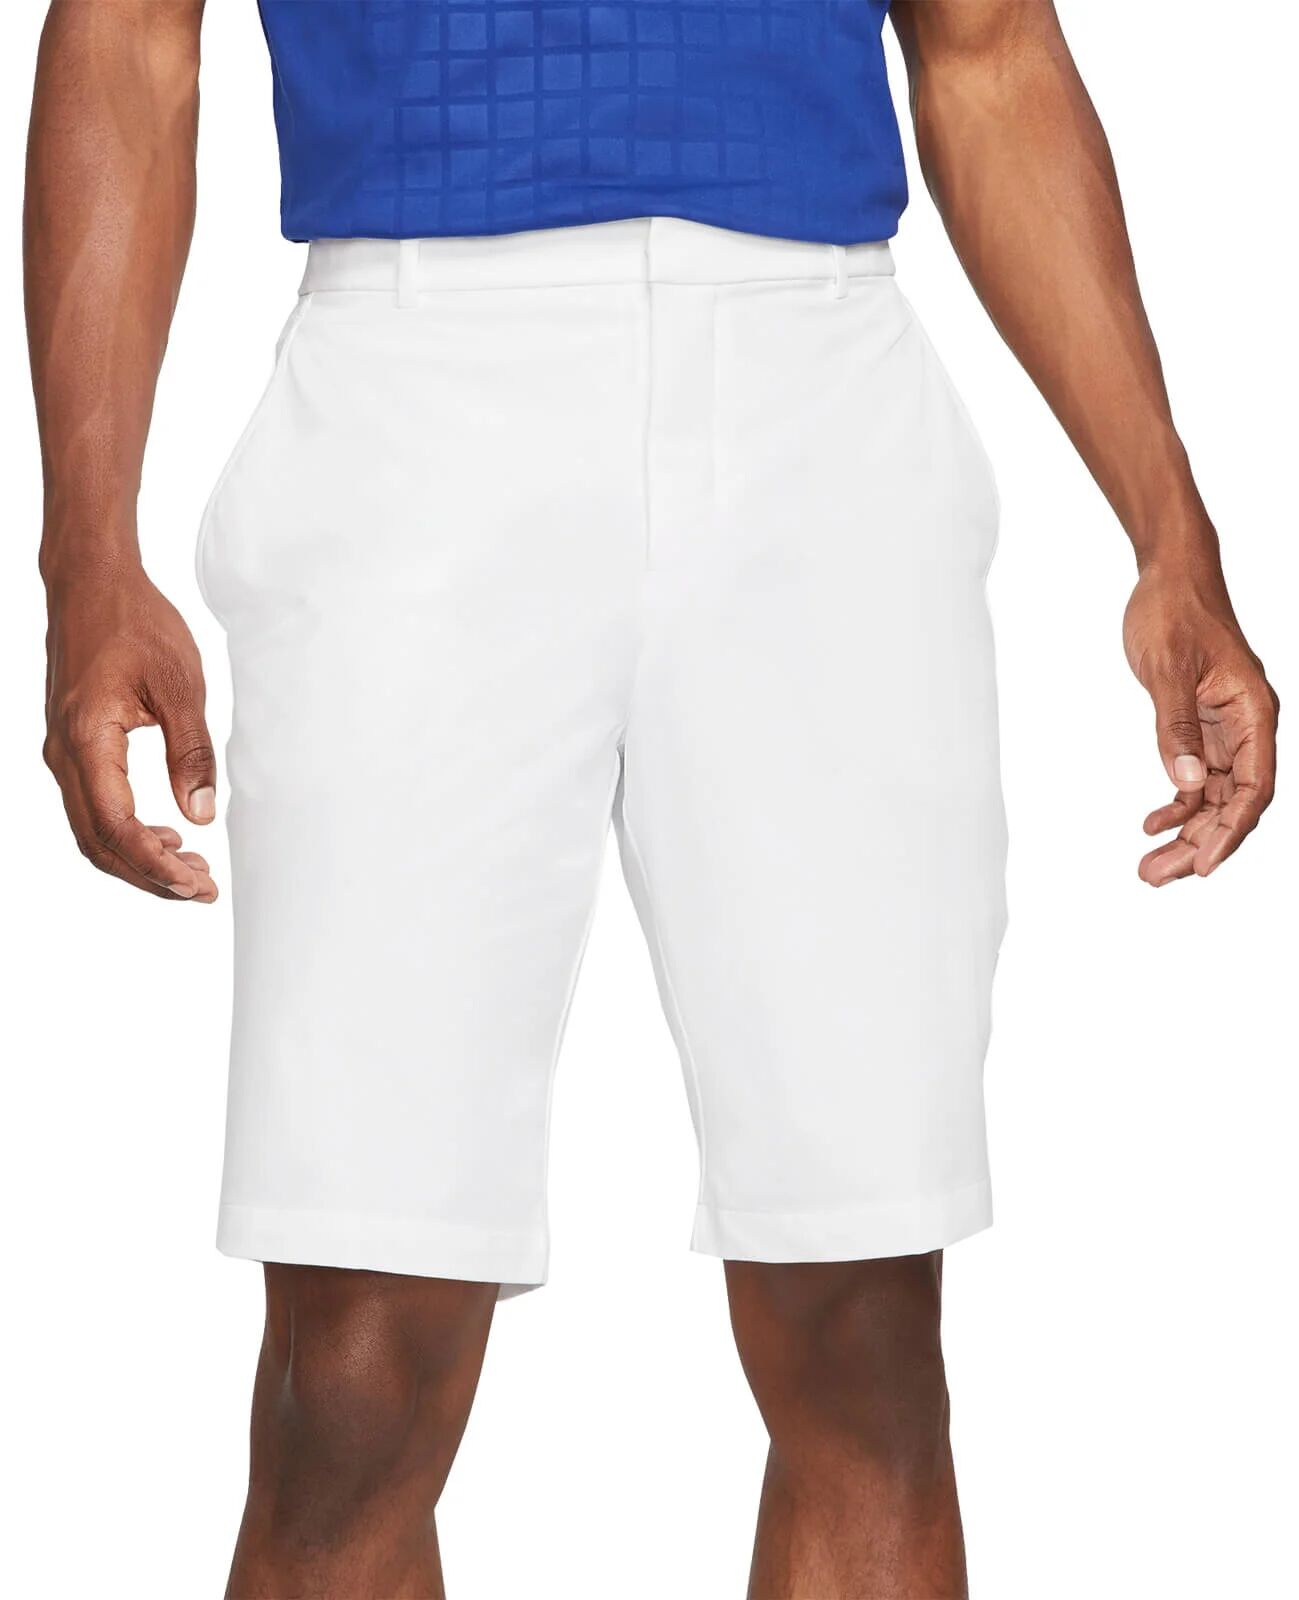 Nike Dri-FIT Men's Golf Shorts - White, Size: 30